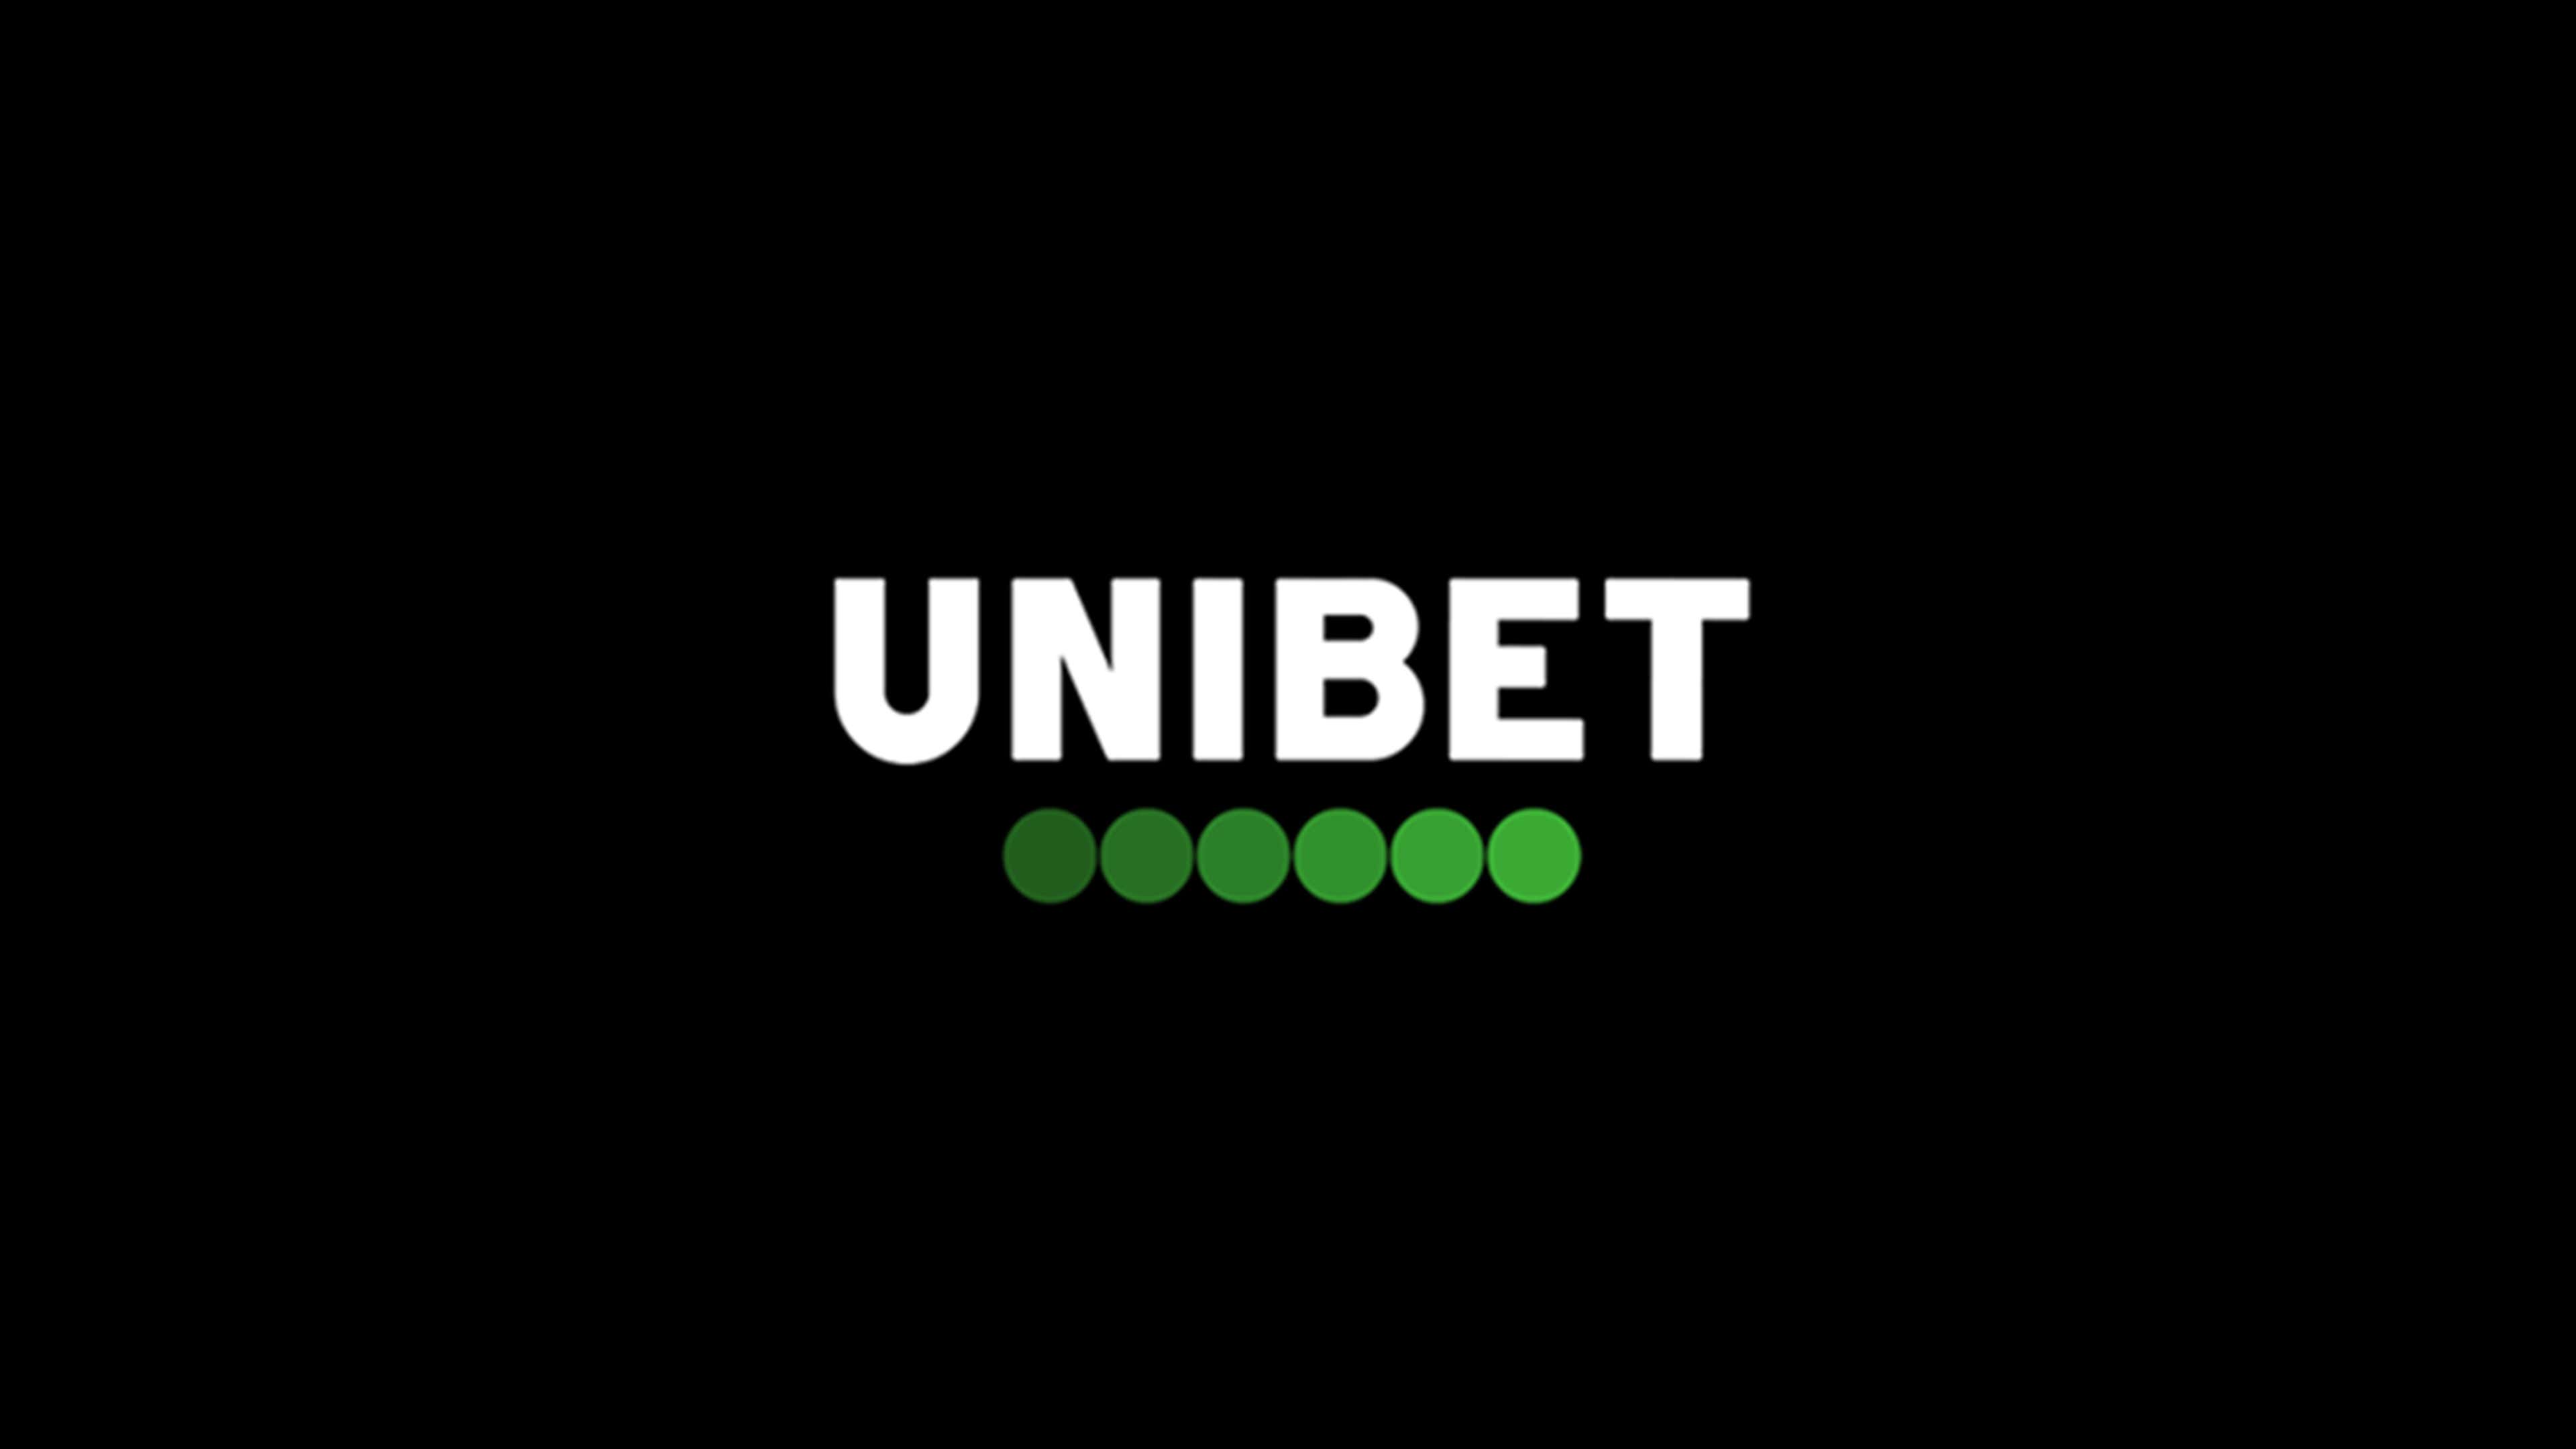 Unibet sign up offer